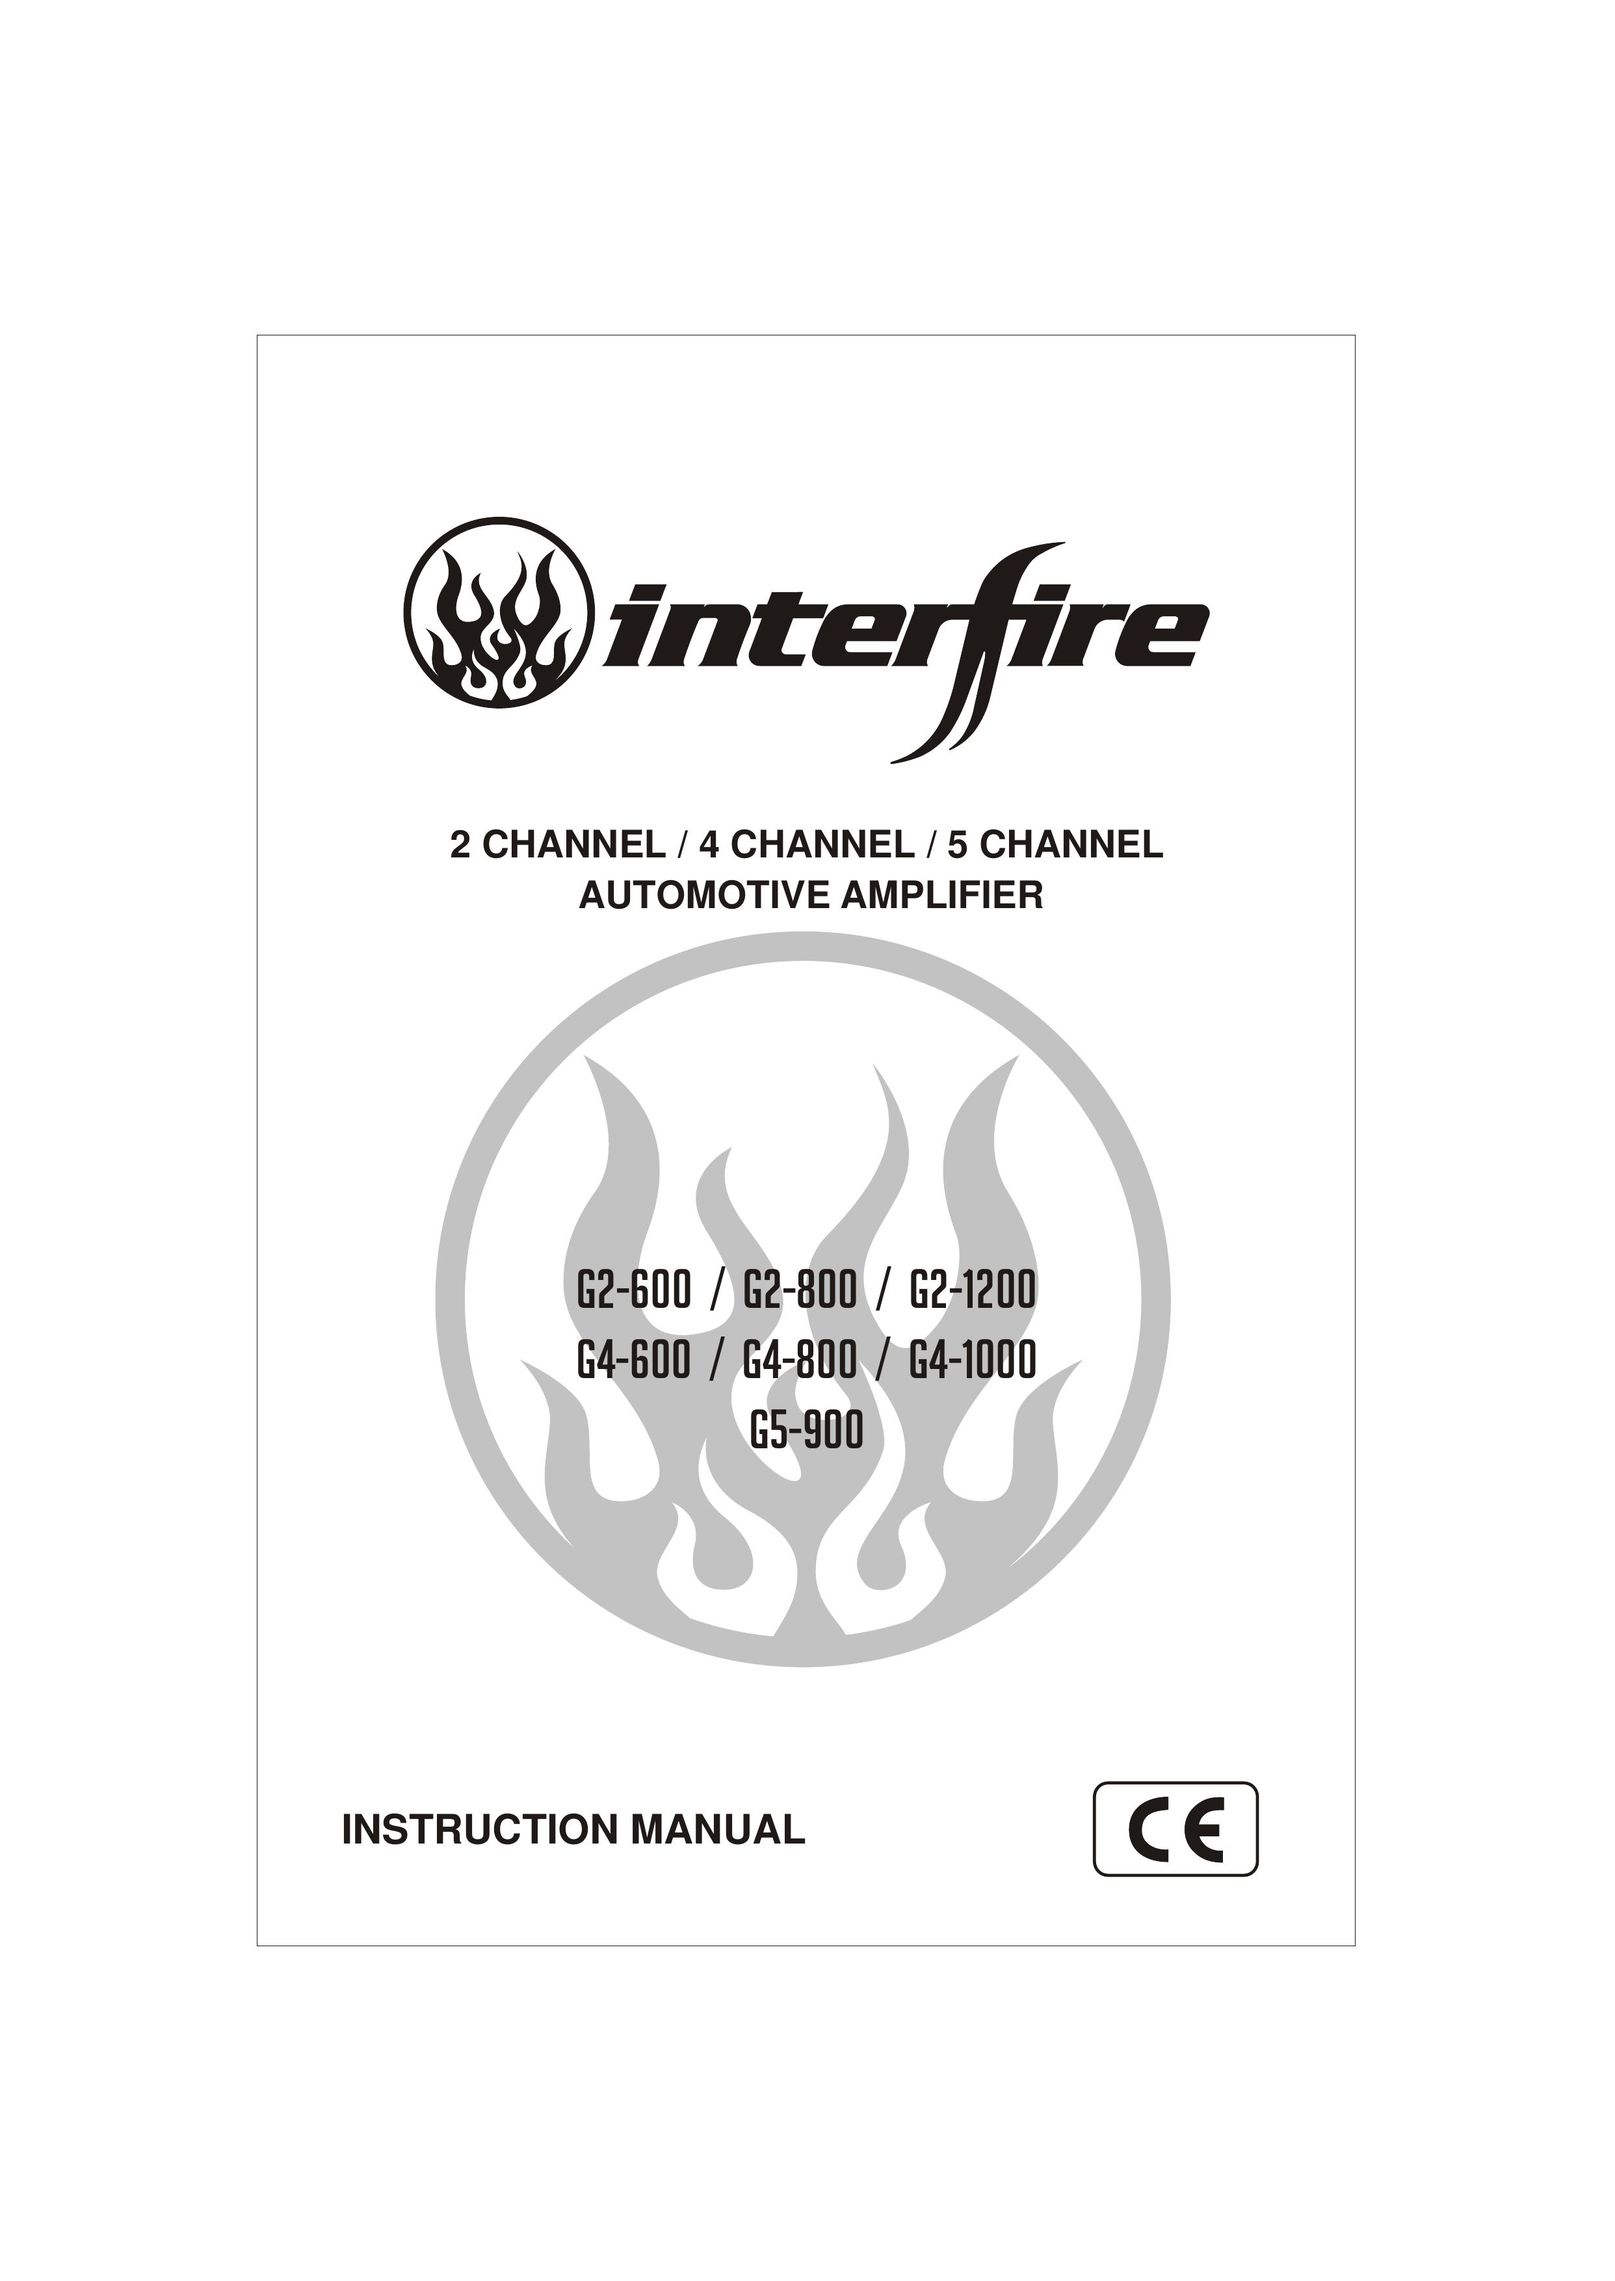 Interfire Audio G5-900 Car Amplifier User Manual